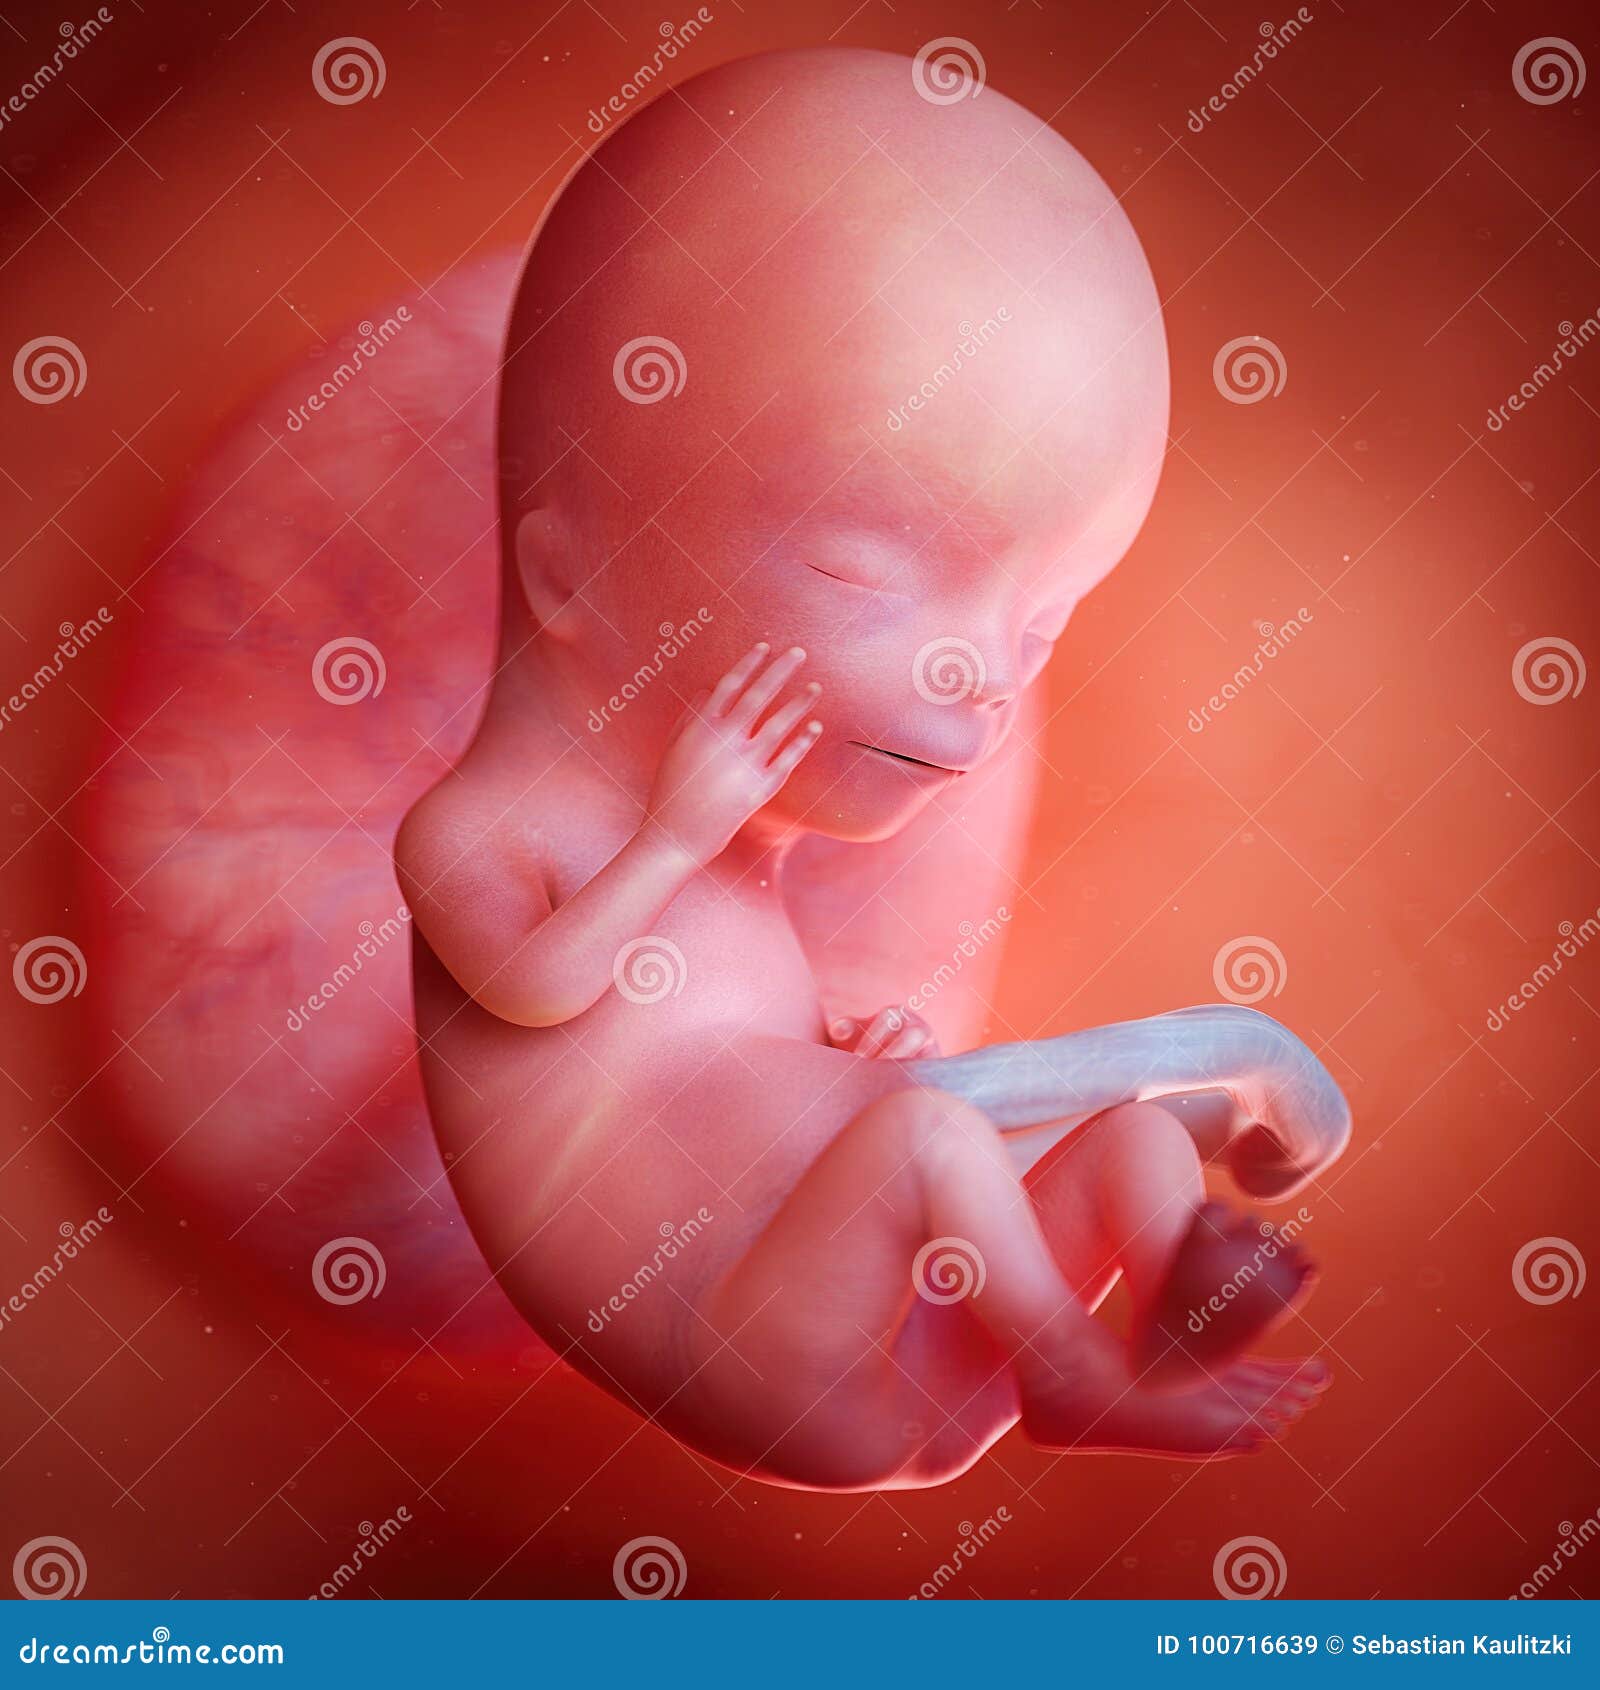 a fetus week 12